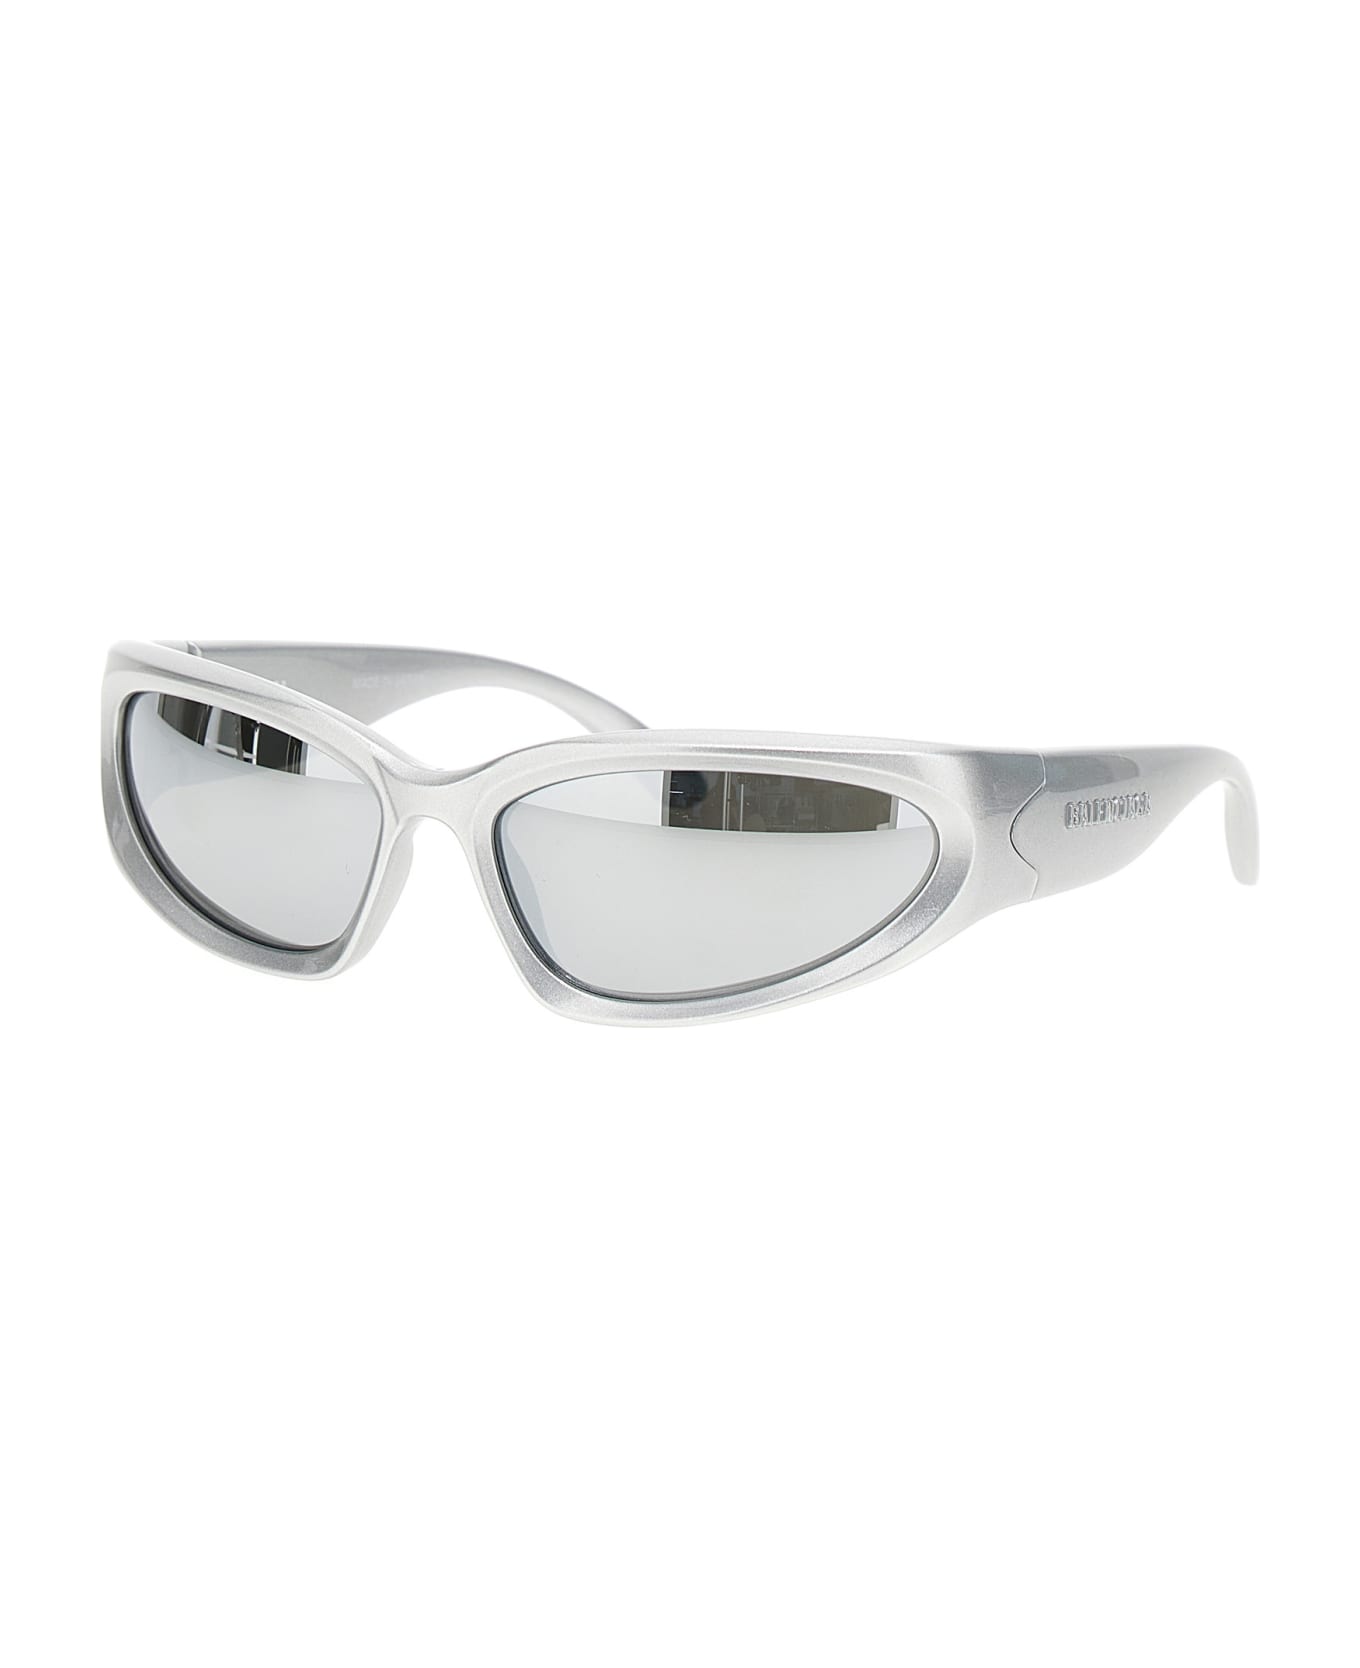 Balenciaga Eyewear Swift Oval Sunglasses - Metallic サングラス